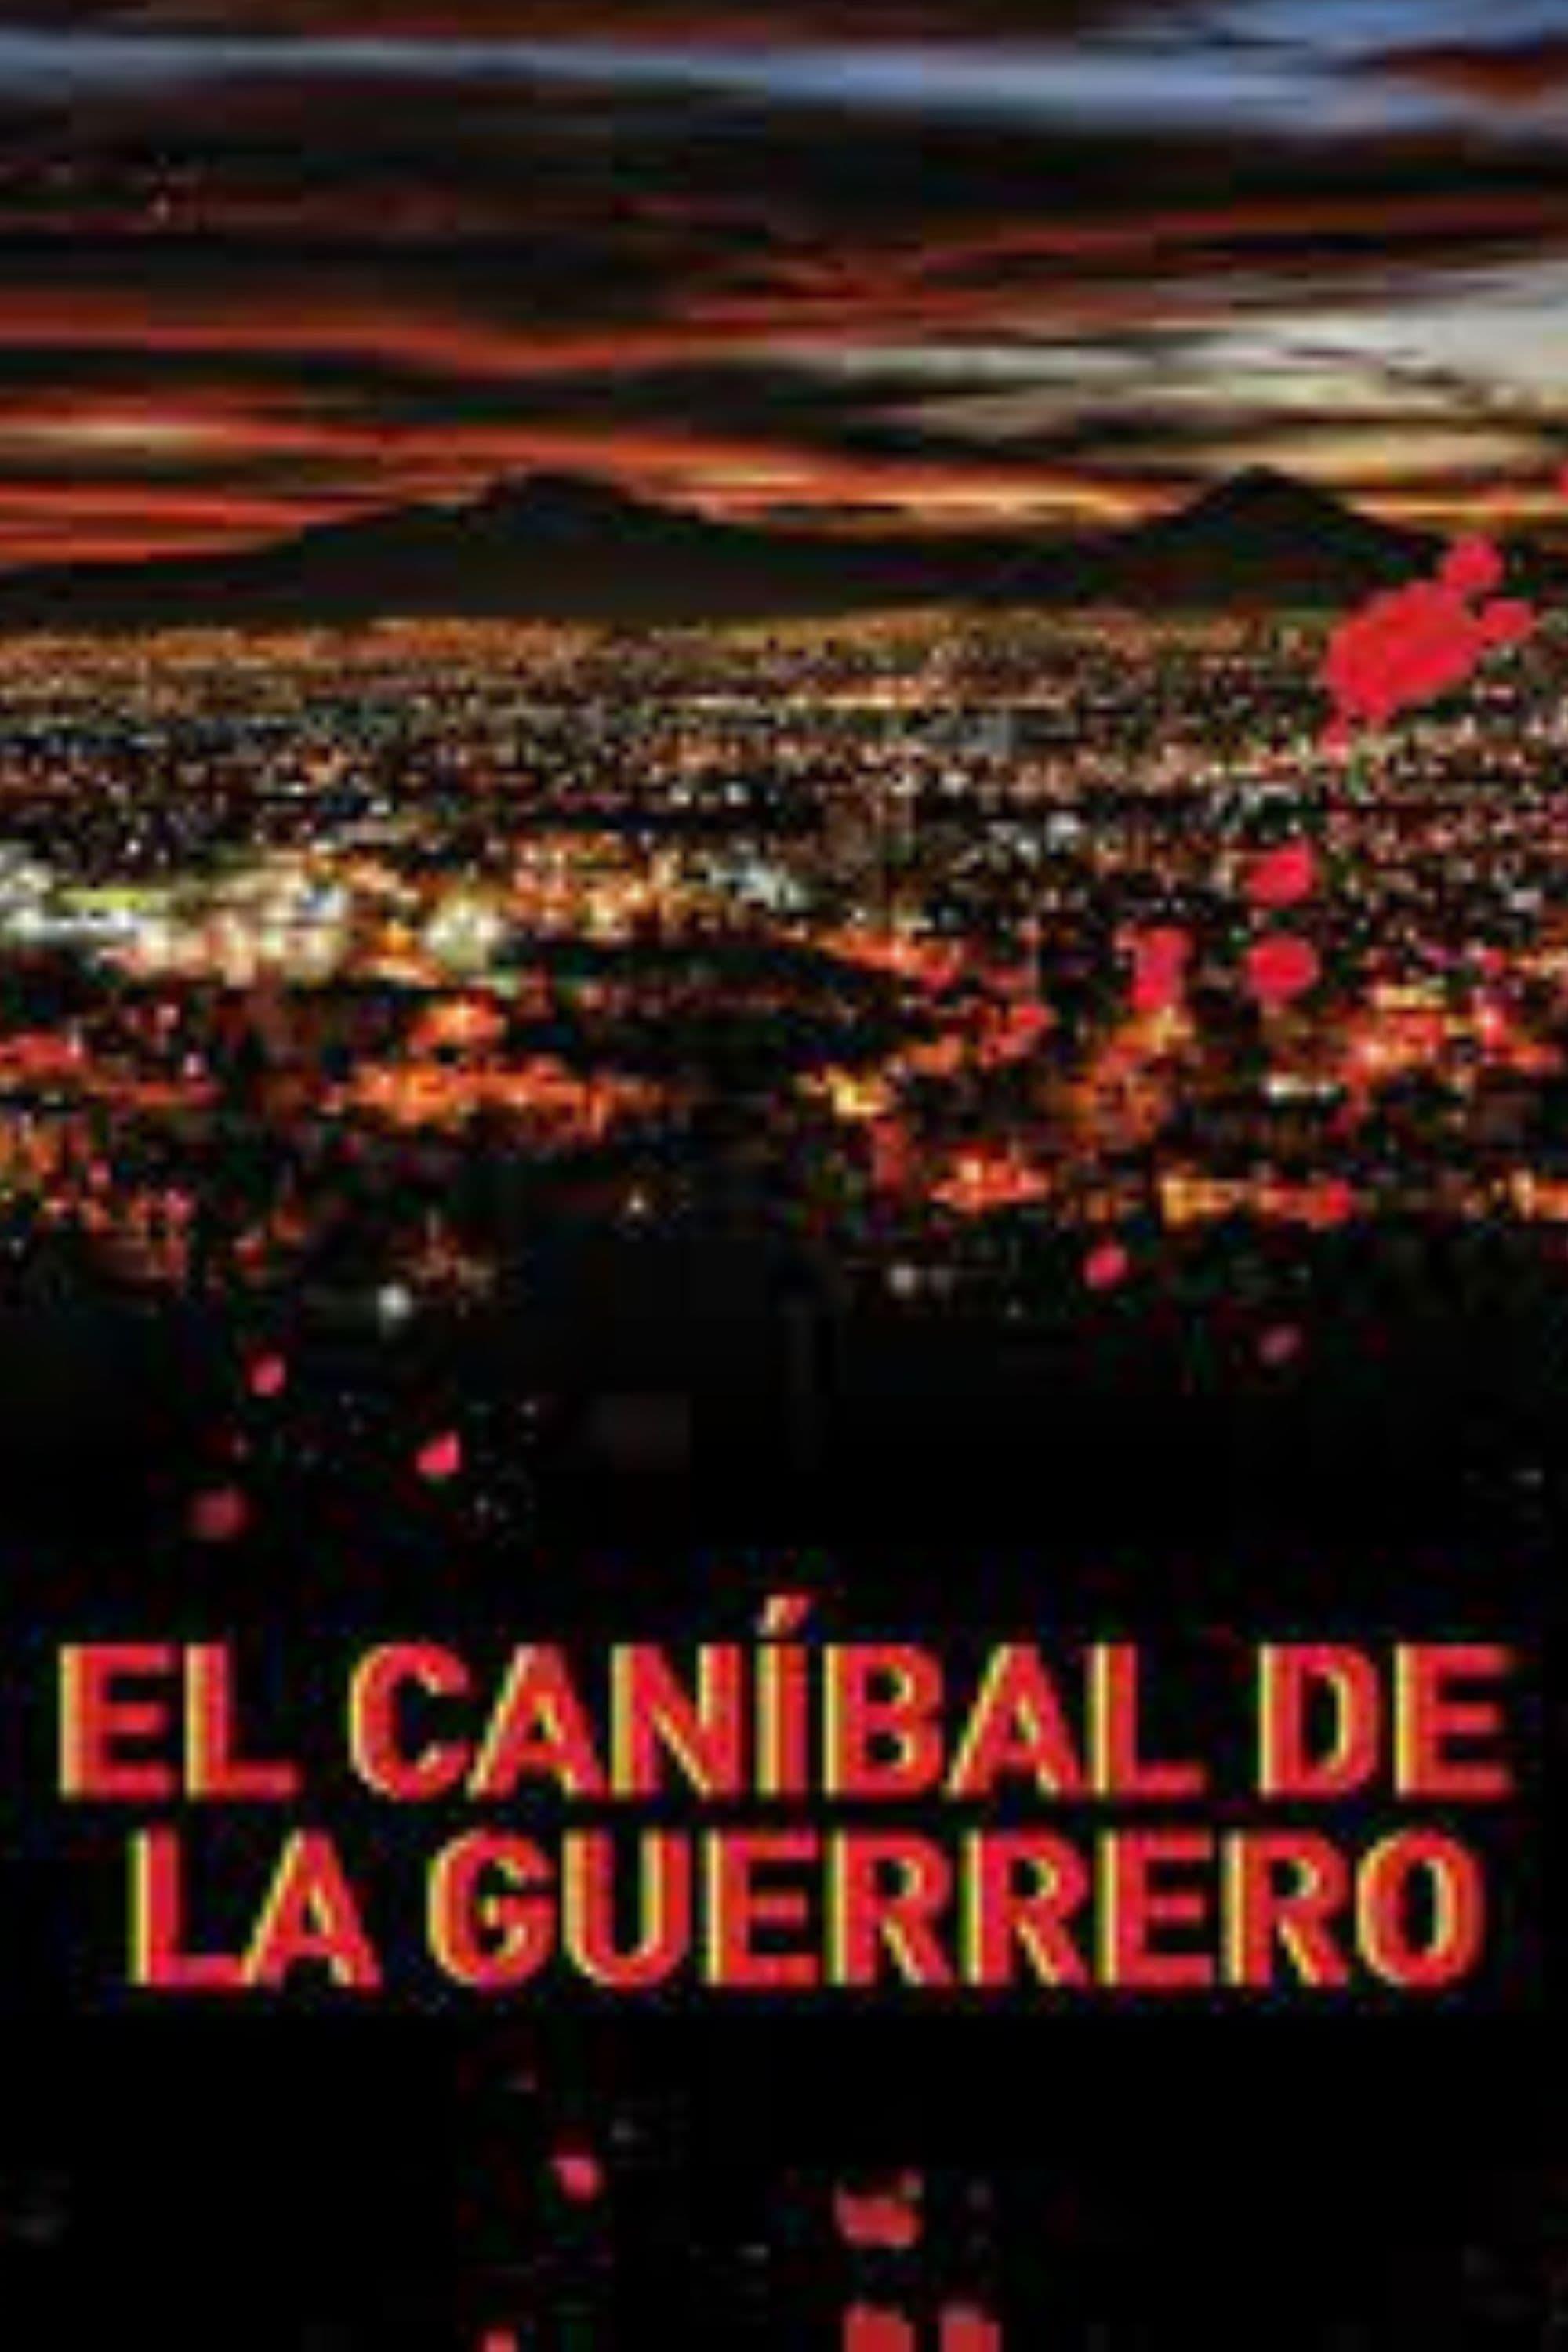 El caníbal de la Guerrero poster